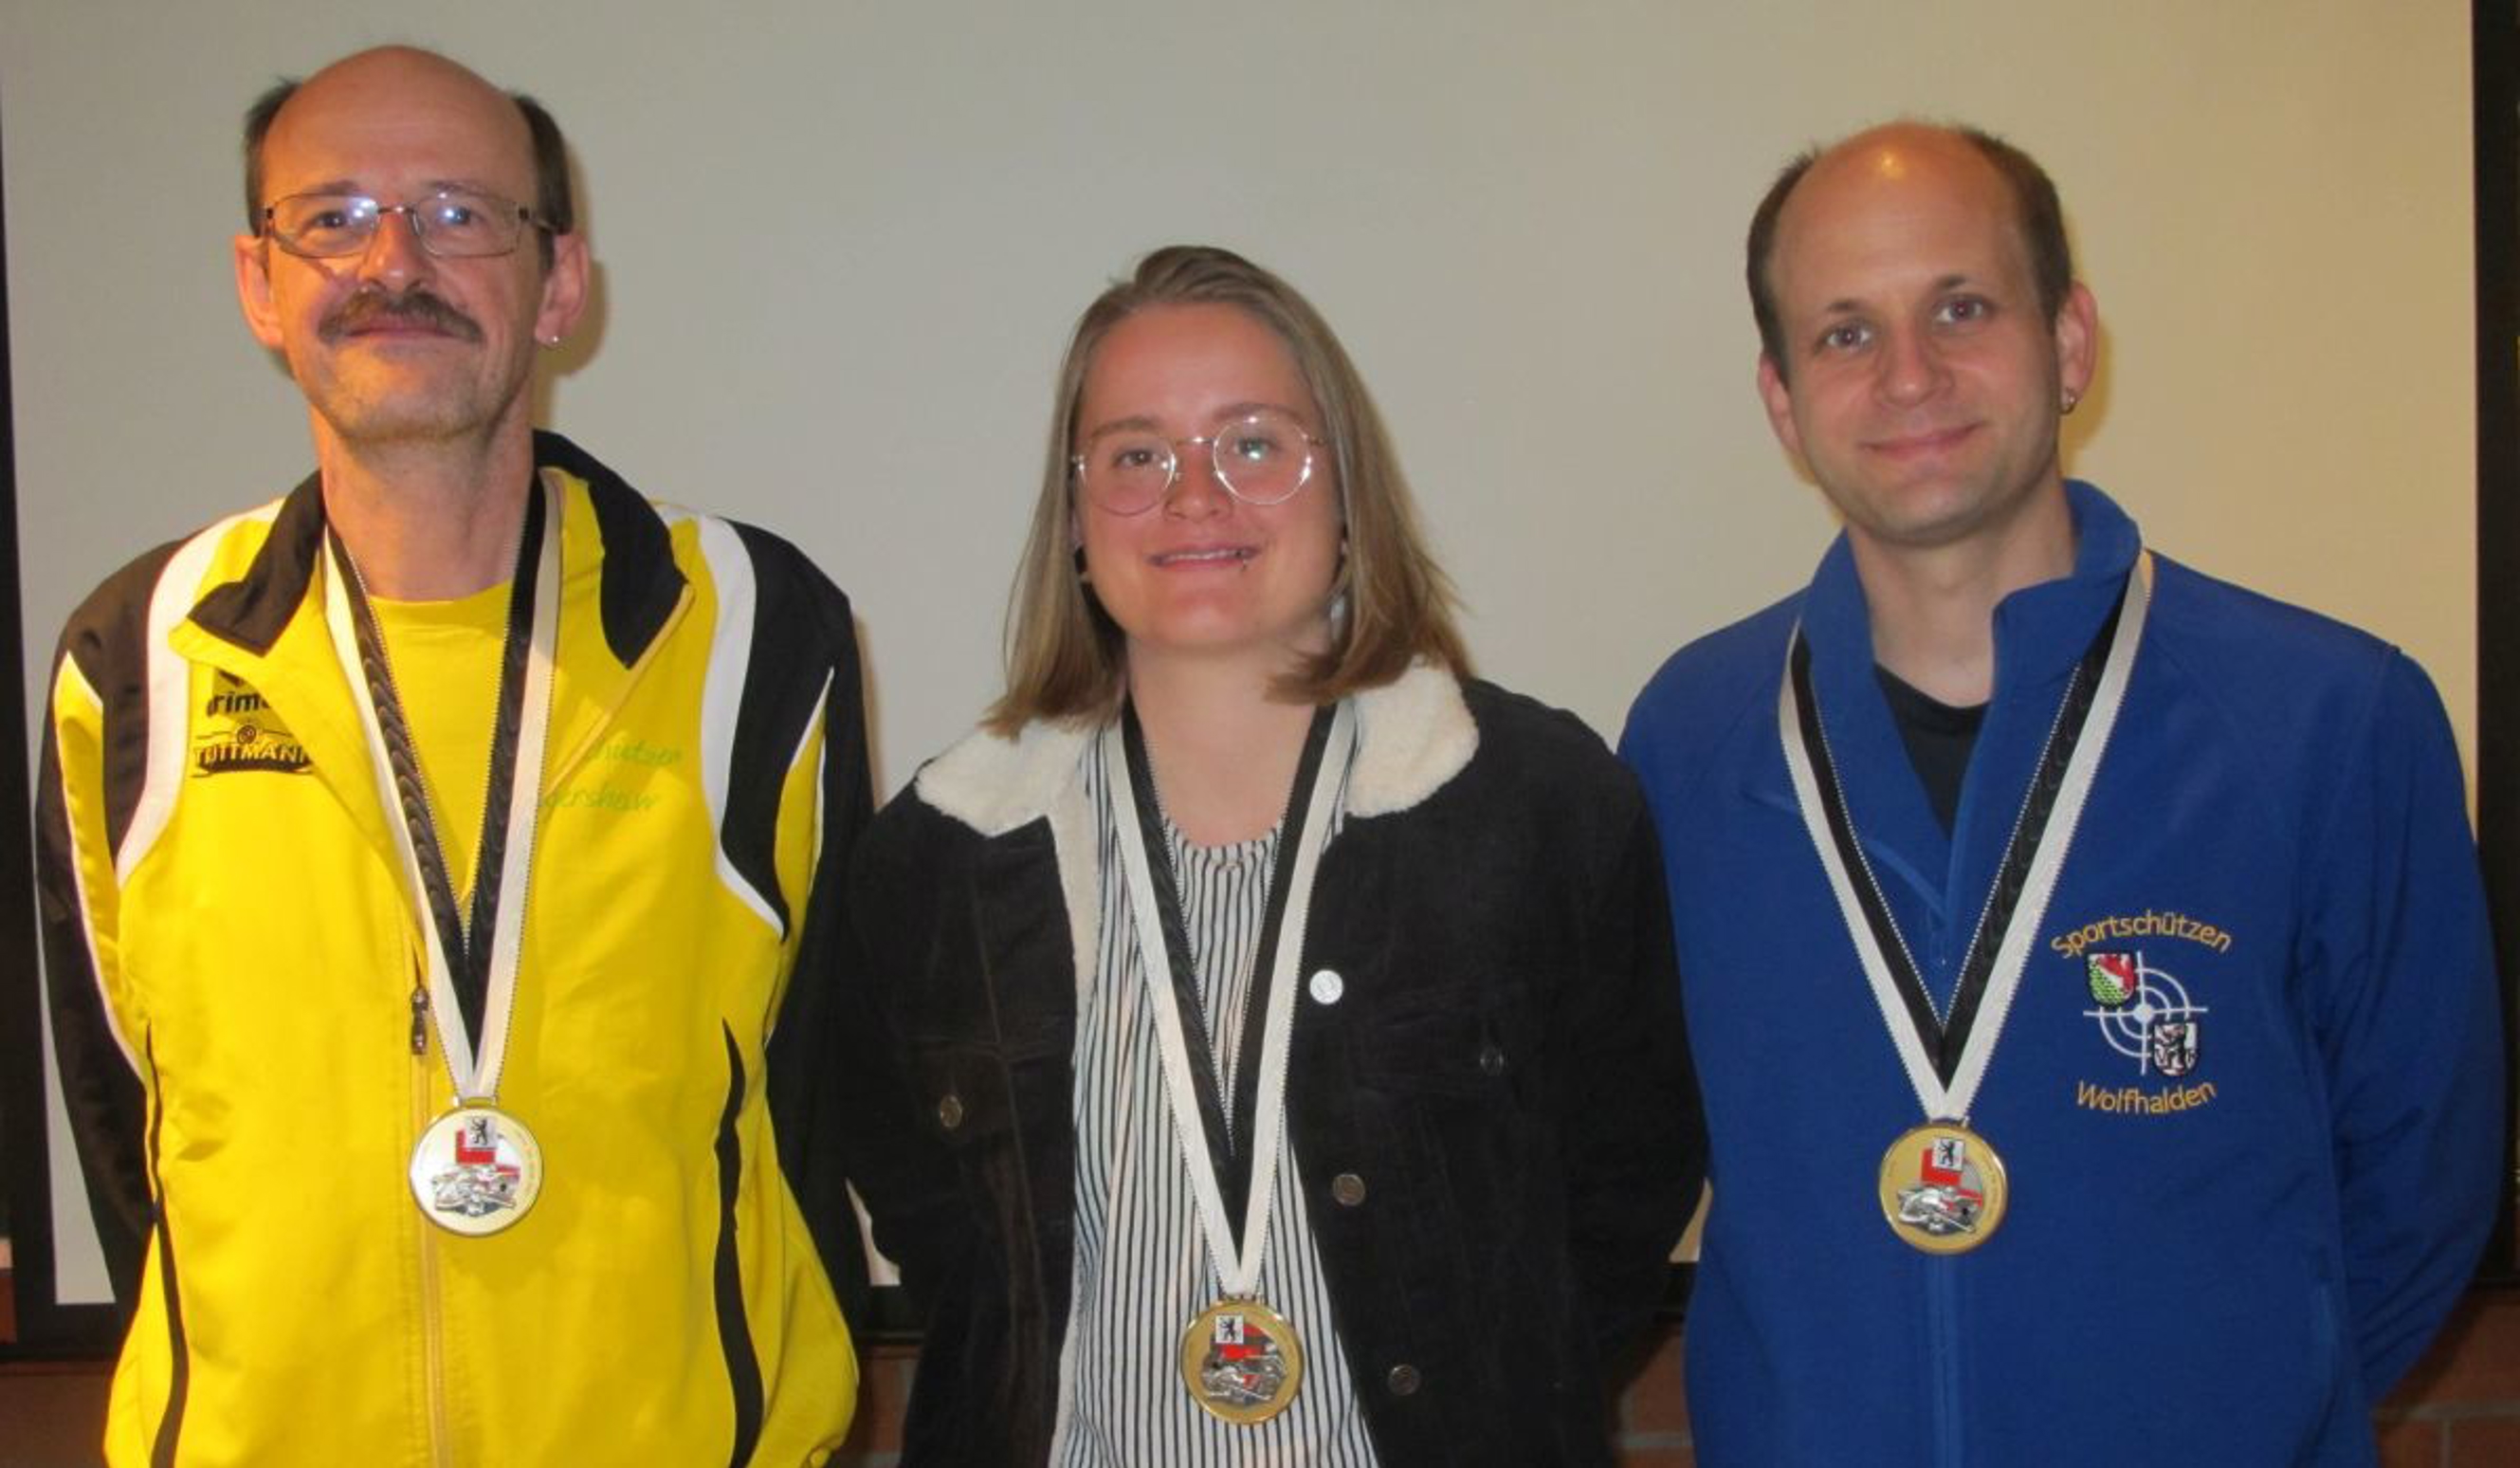 Andreas Diem (Gewinner 2-Stellung und Senioren/Veteranen Liegend); Franziska Stark (Gewinnerin 3-Stellung); Ralph Künzler (Gewinner Frauen/Männer Liegend).